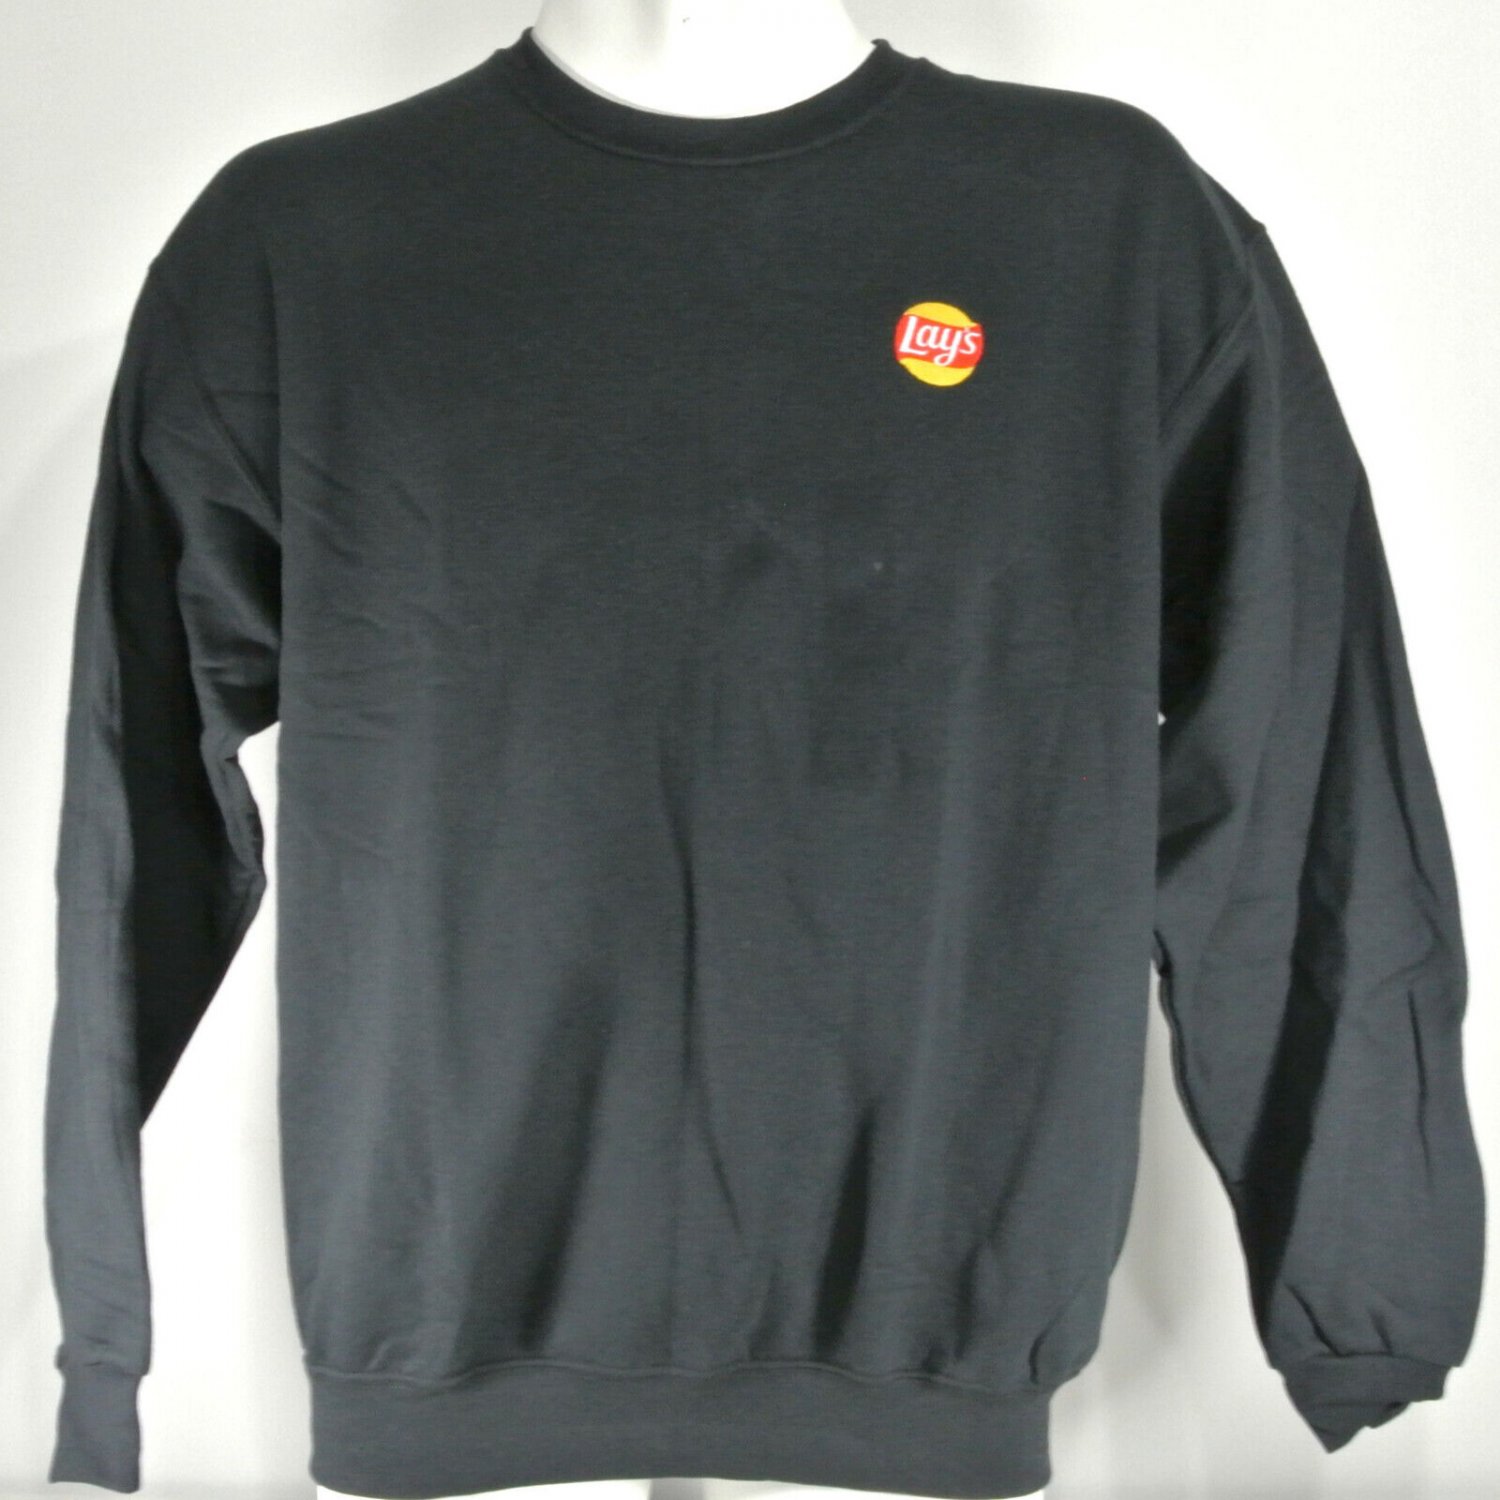 LAY'S Frito Lay Potato Chips Employee Uniform Sweatshirt Black 3XL NEW MT